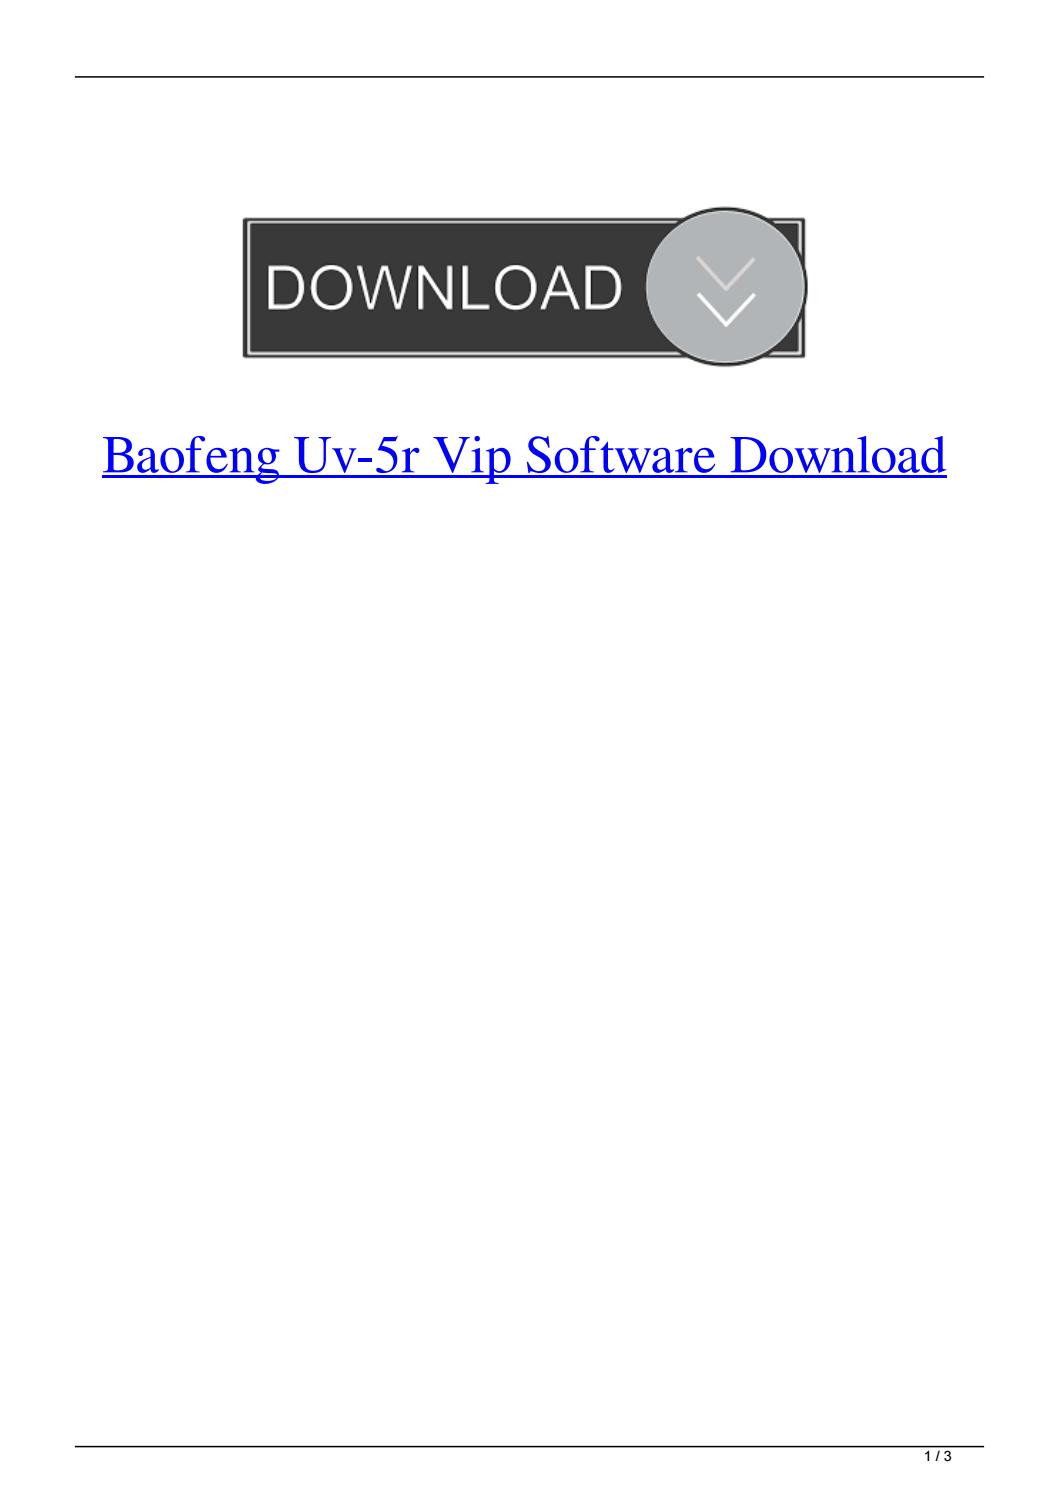 baofeng software for mac